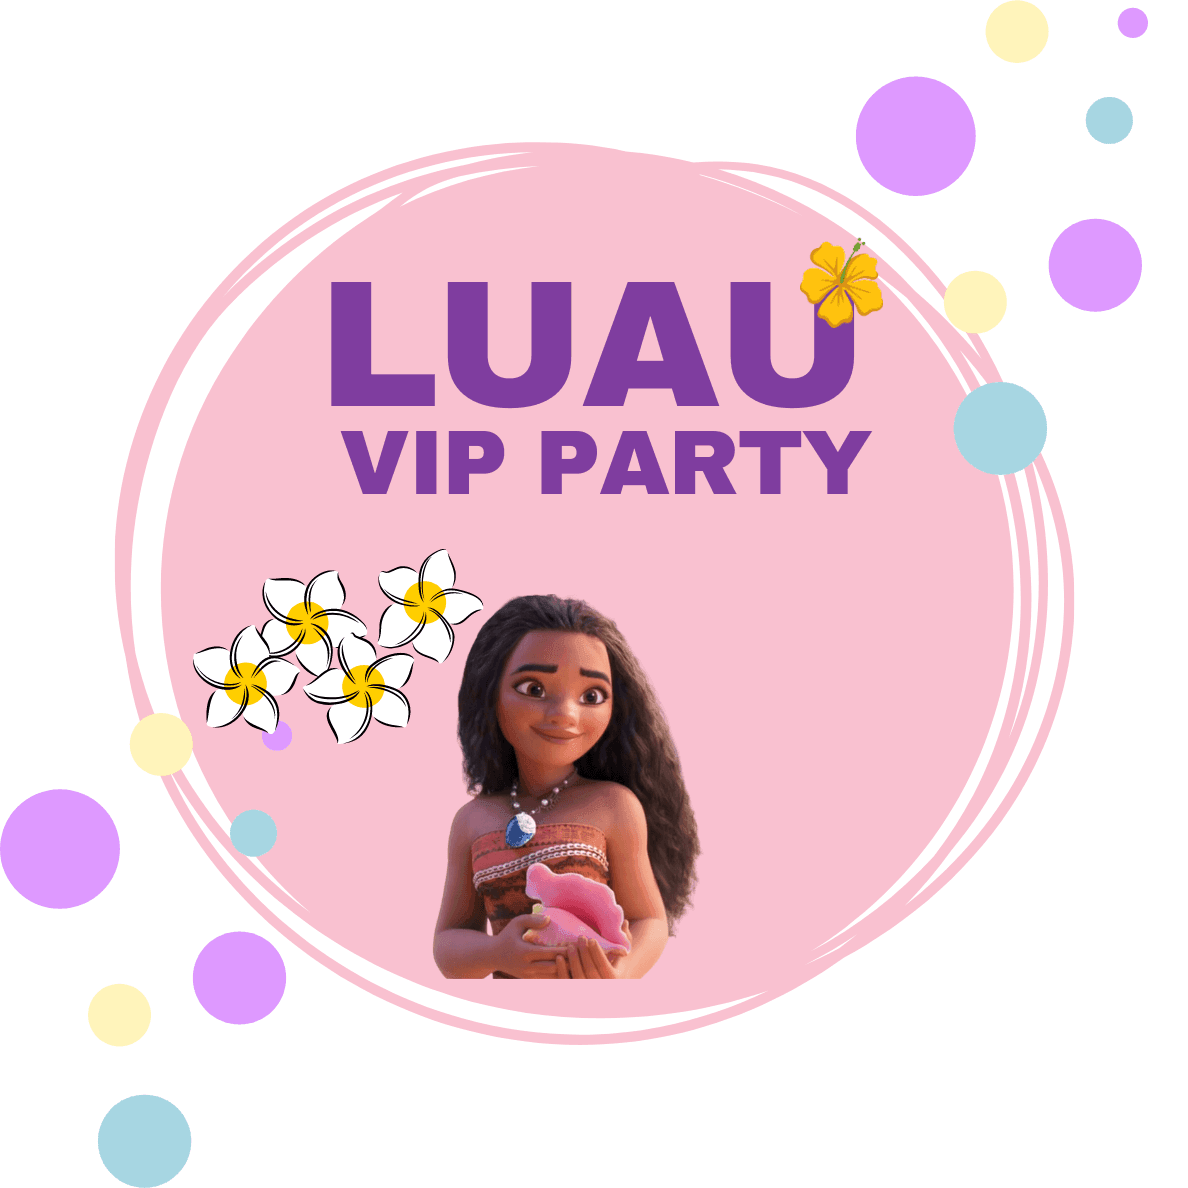 Luau VIP Party